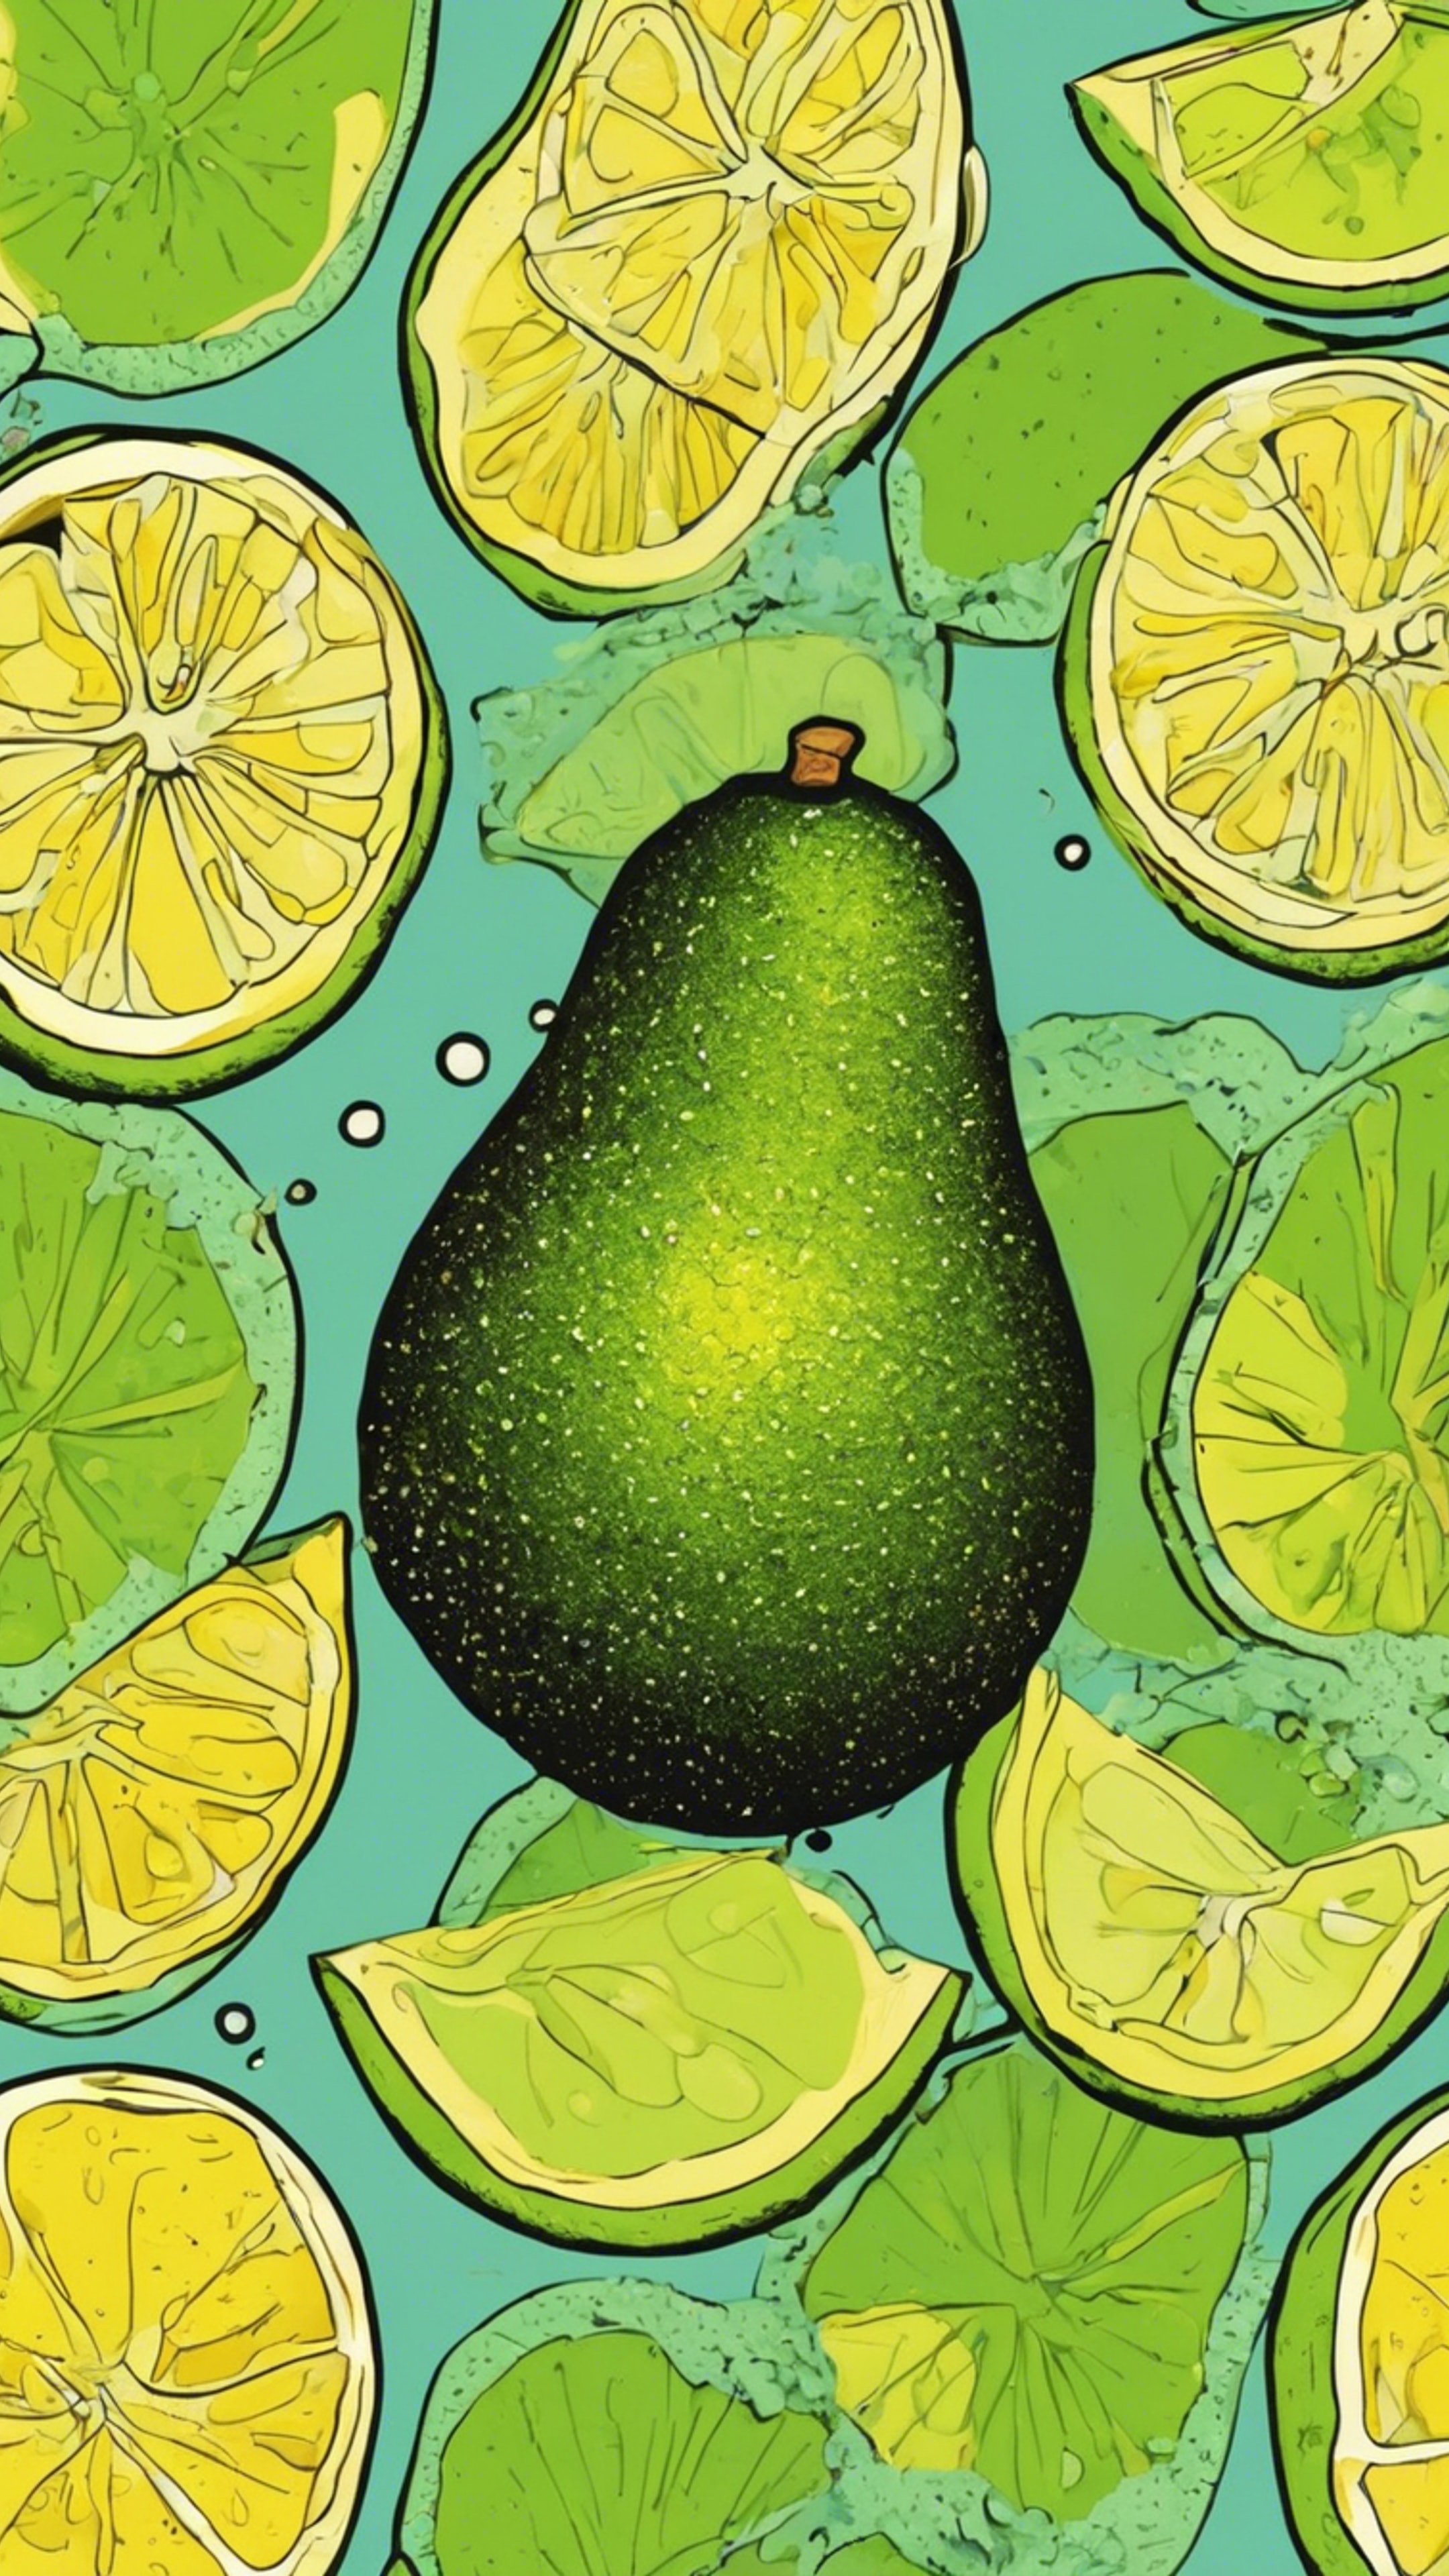 An 80's inspired pop-art style image of a sprinkling of lemon on a freshly cut avocado. ផ្ទាំង​រូបភាព[a26b21fc8dc241dea078]